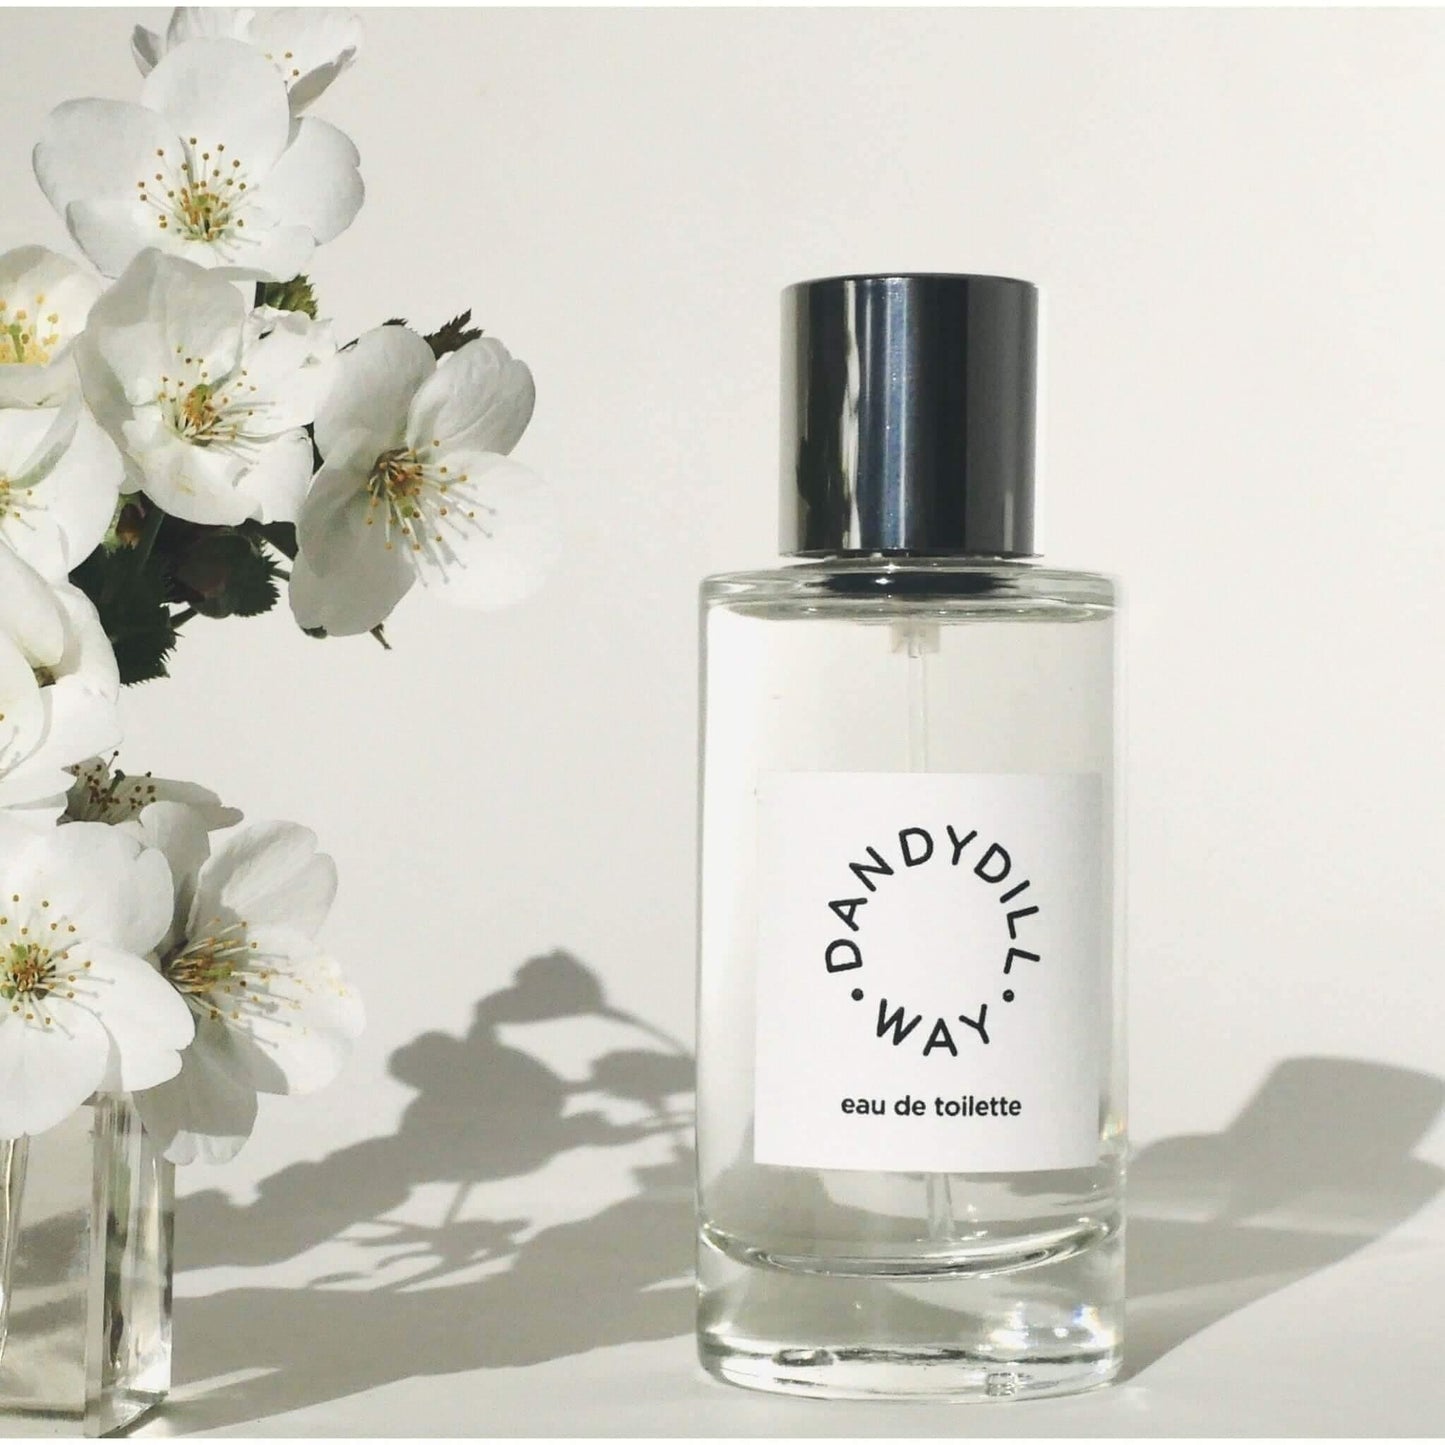 Organic natural perfume